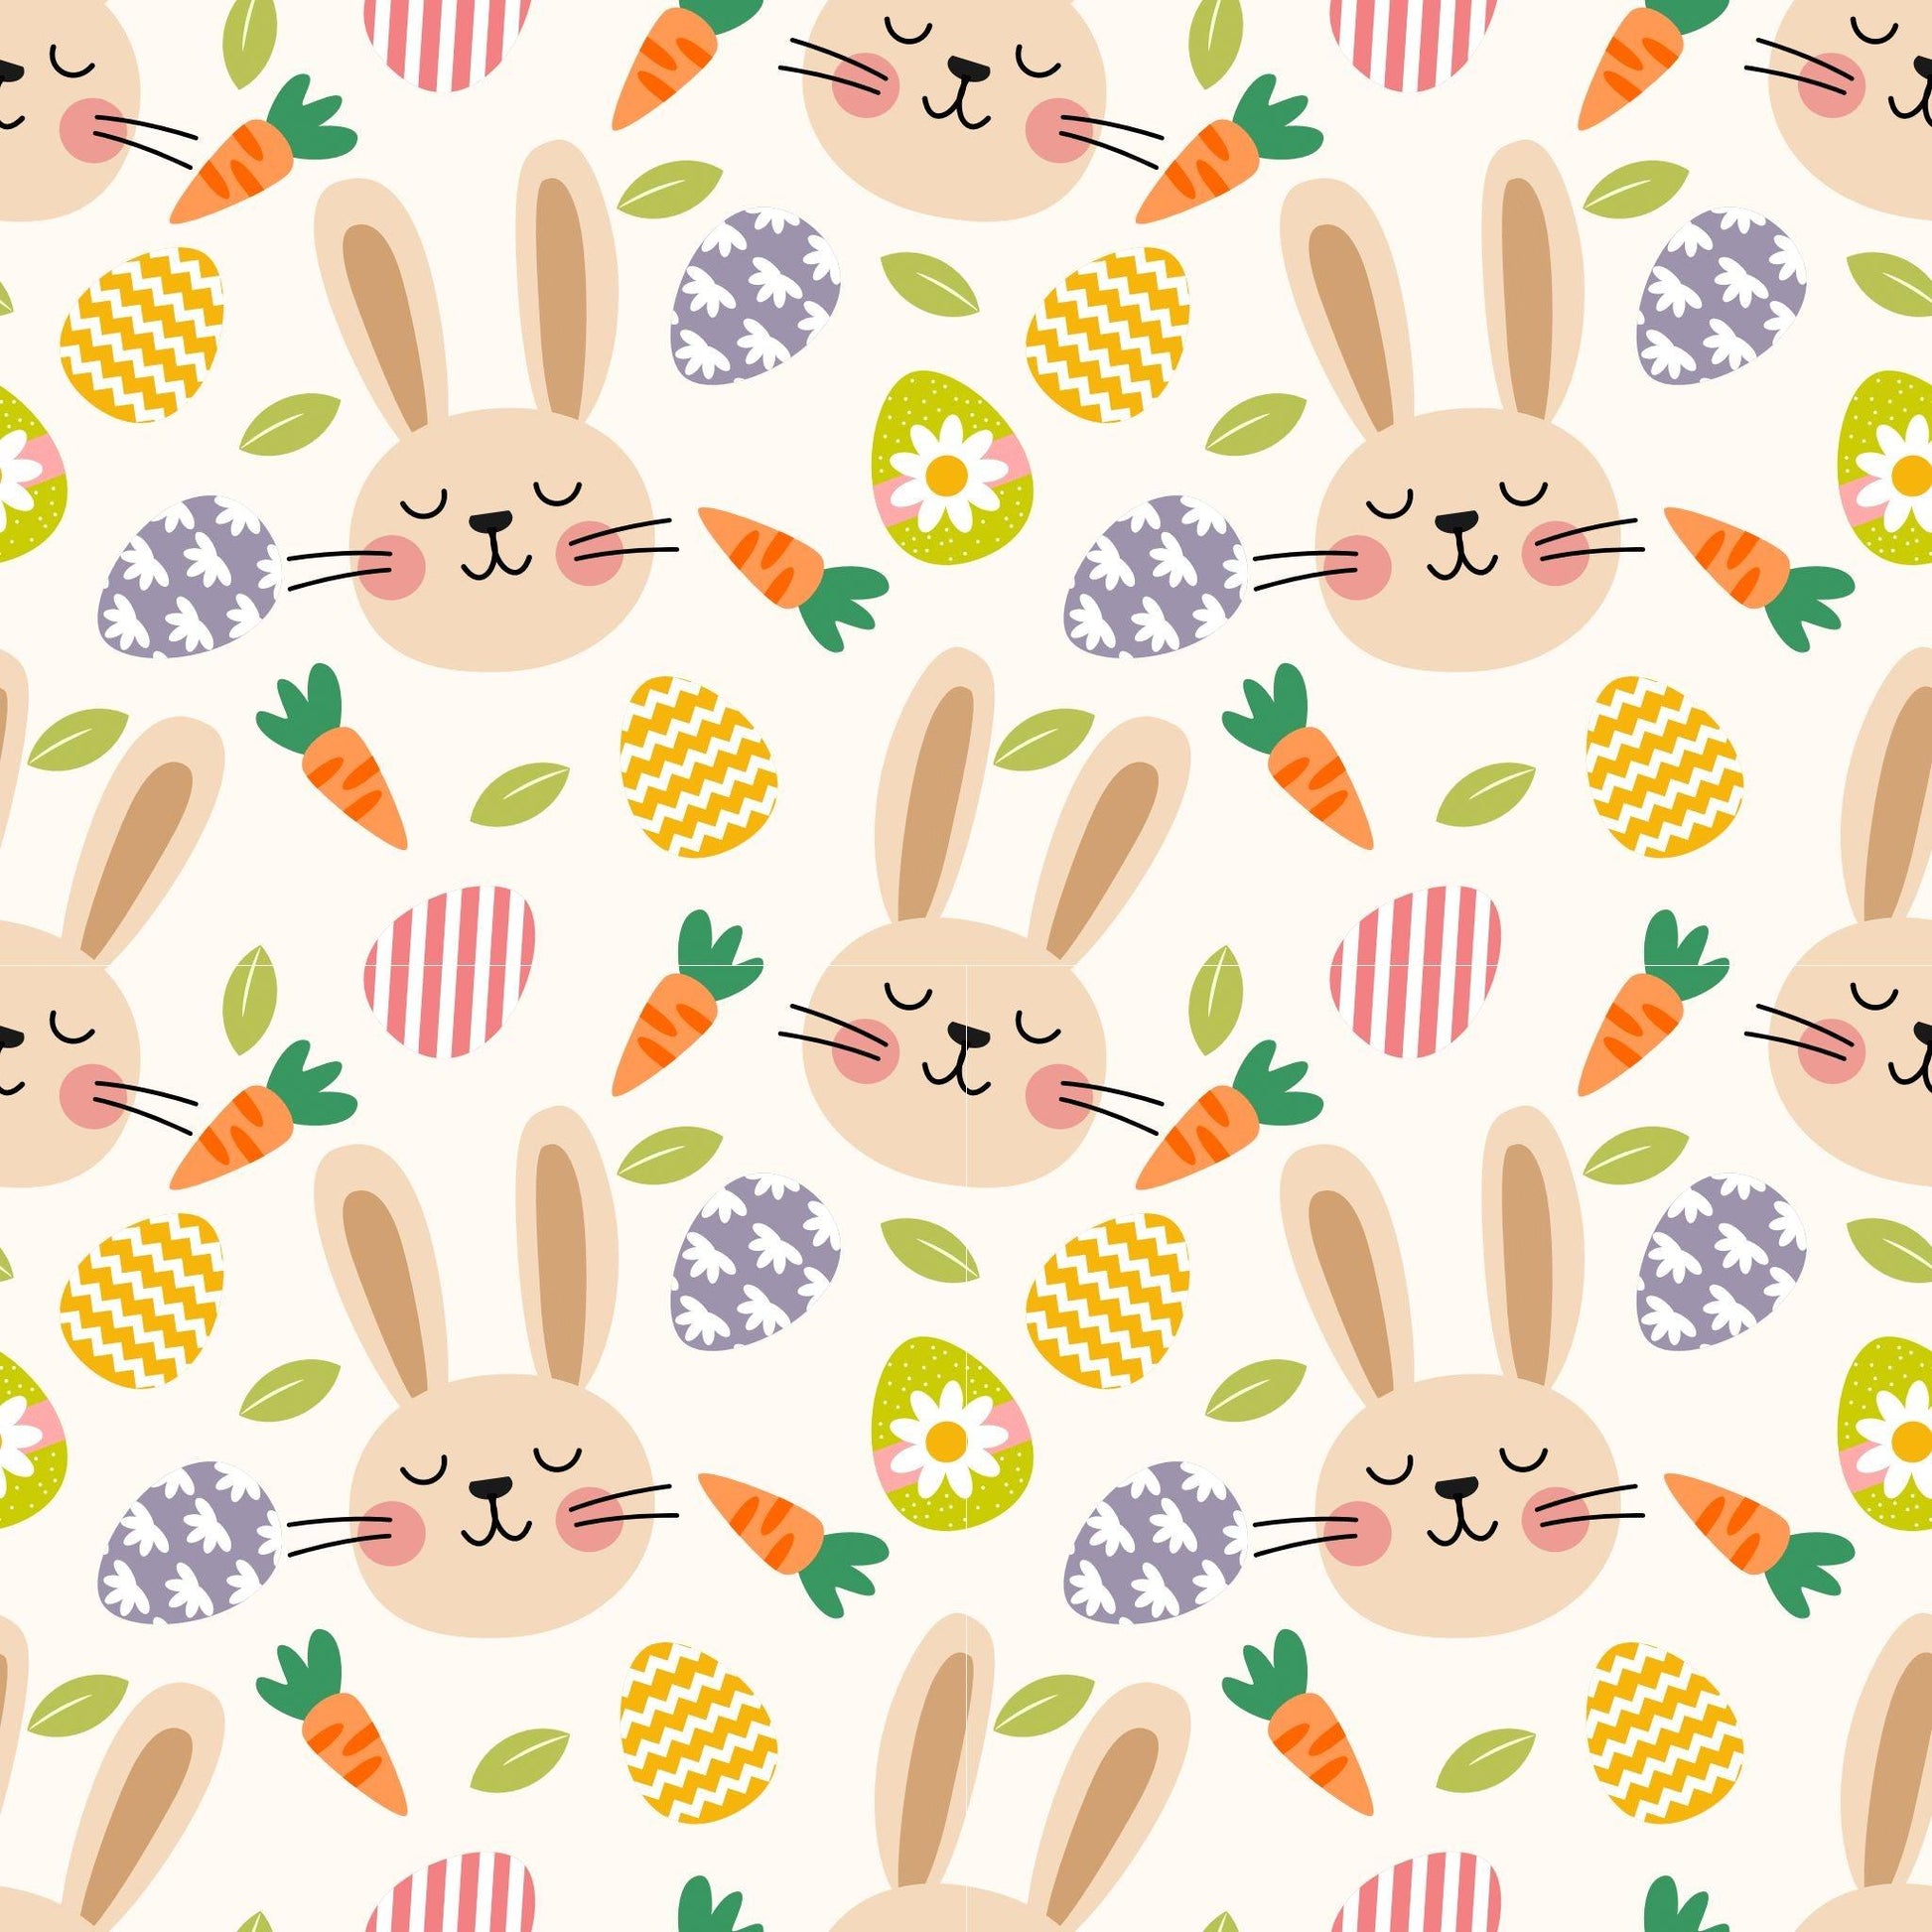 Bunny Toss on Bamboo/Spandex Jersey Fabric - Nature's Fabrics